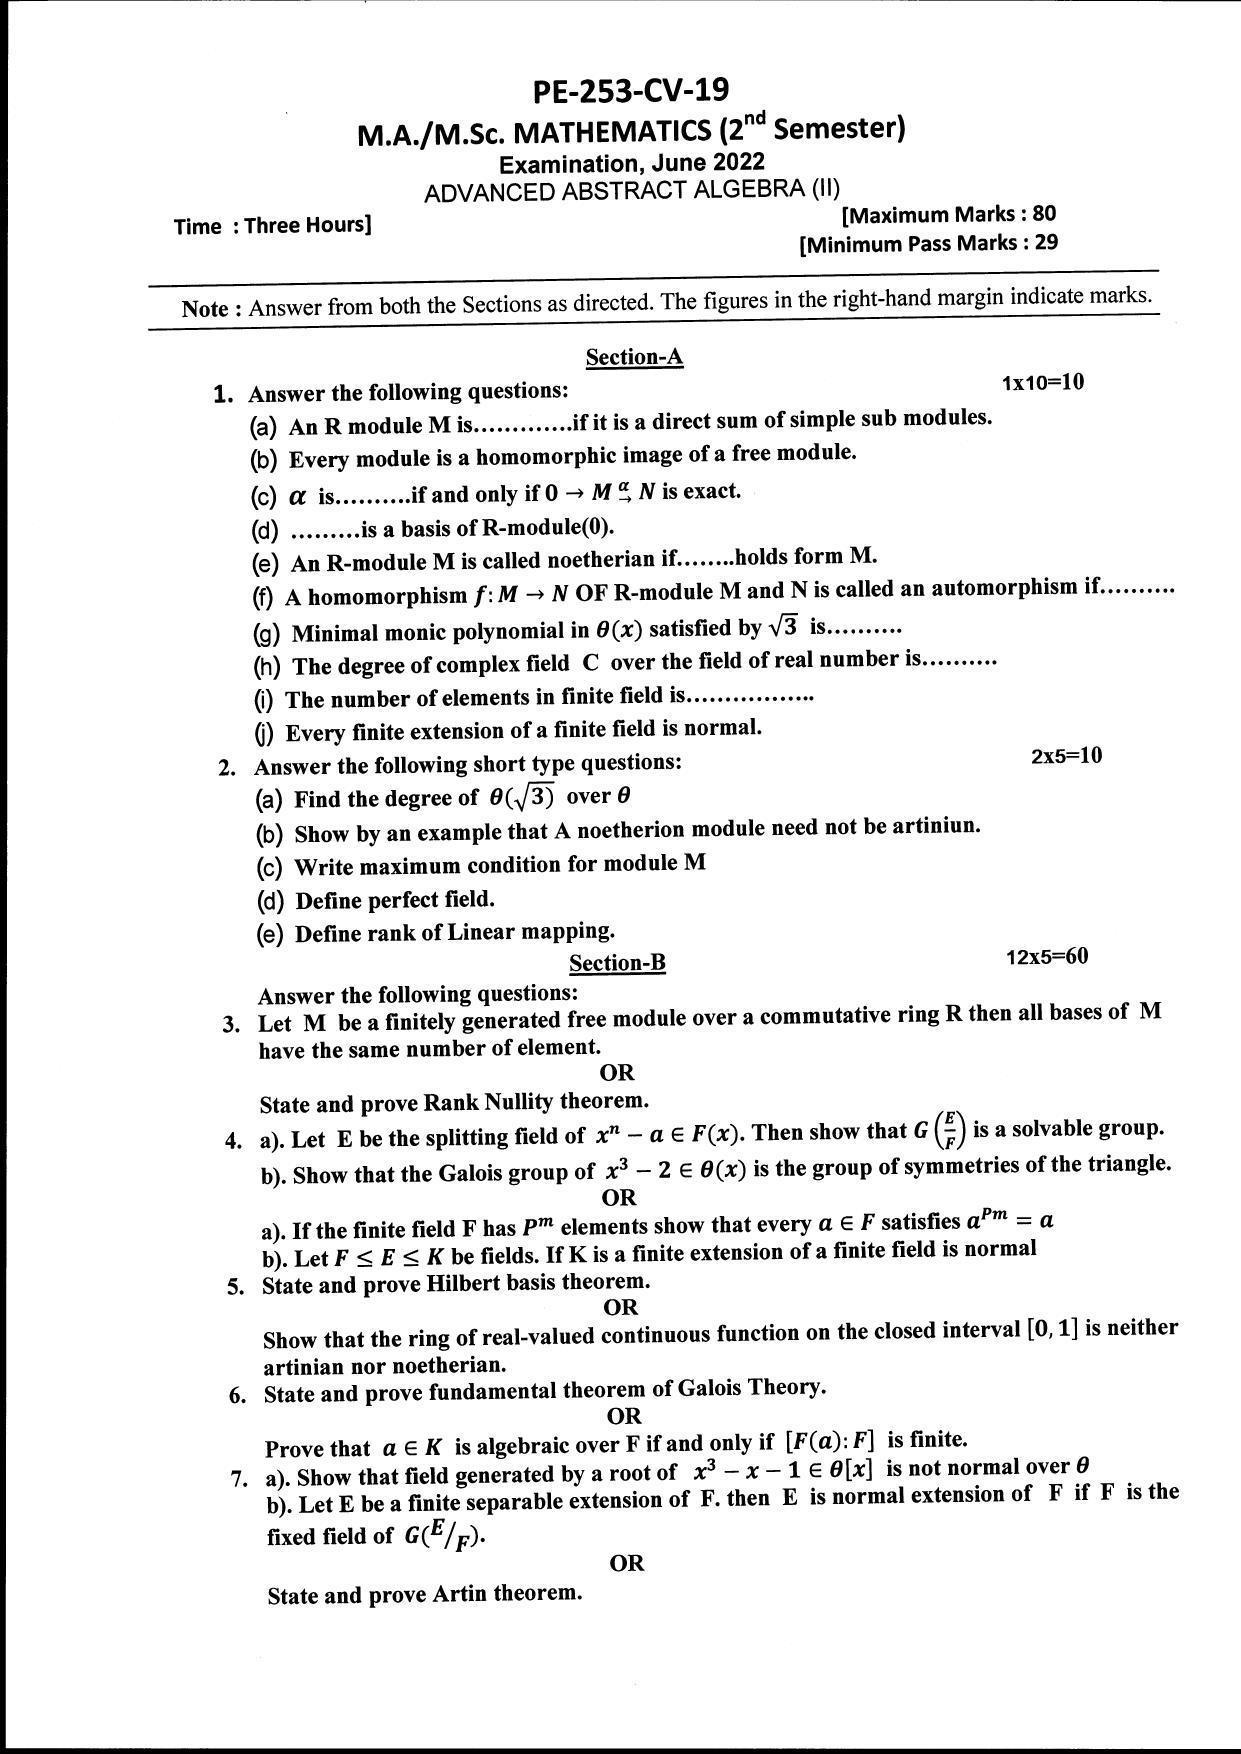 Bilaspur University Question Paper June 2022:M.A./M.Sc. Mathematics (Second Semester) Advanced Abstract Algebra  (II) Paper 1 - Page 1